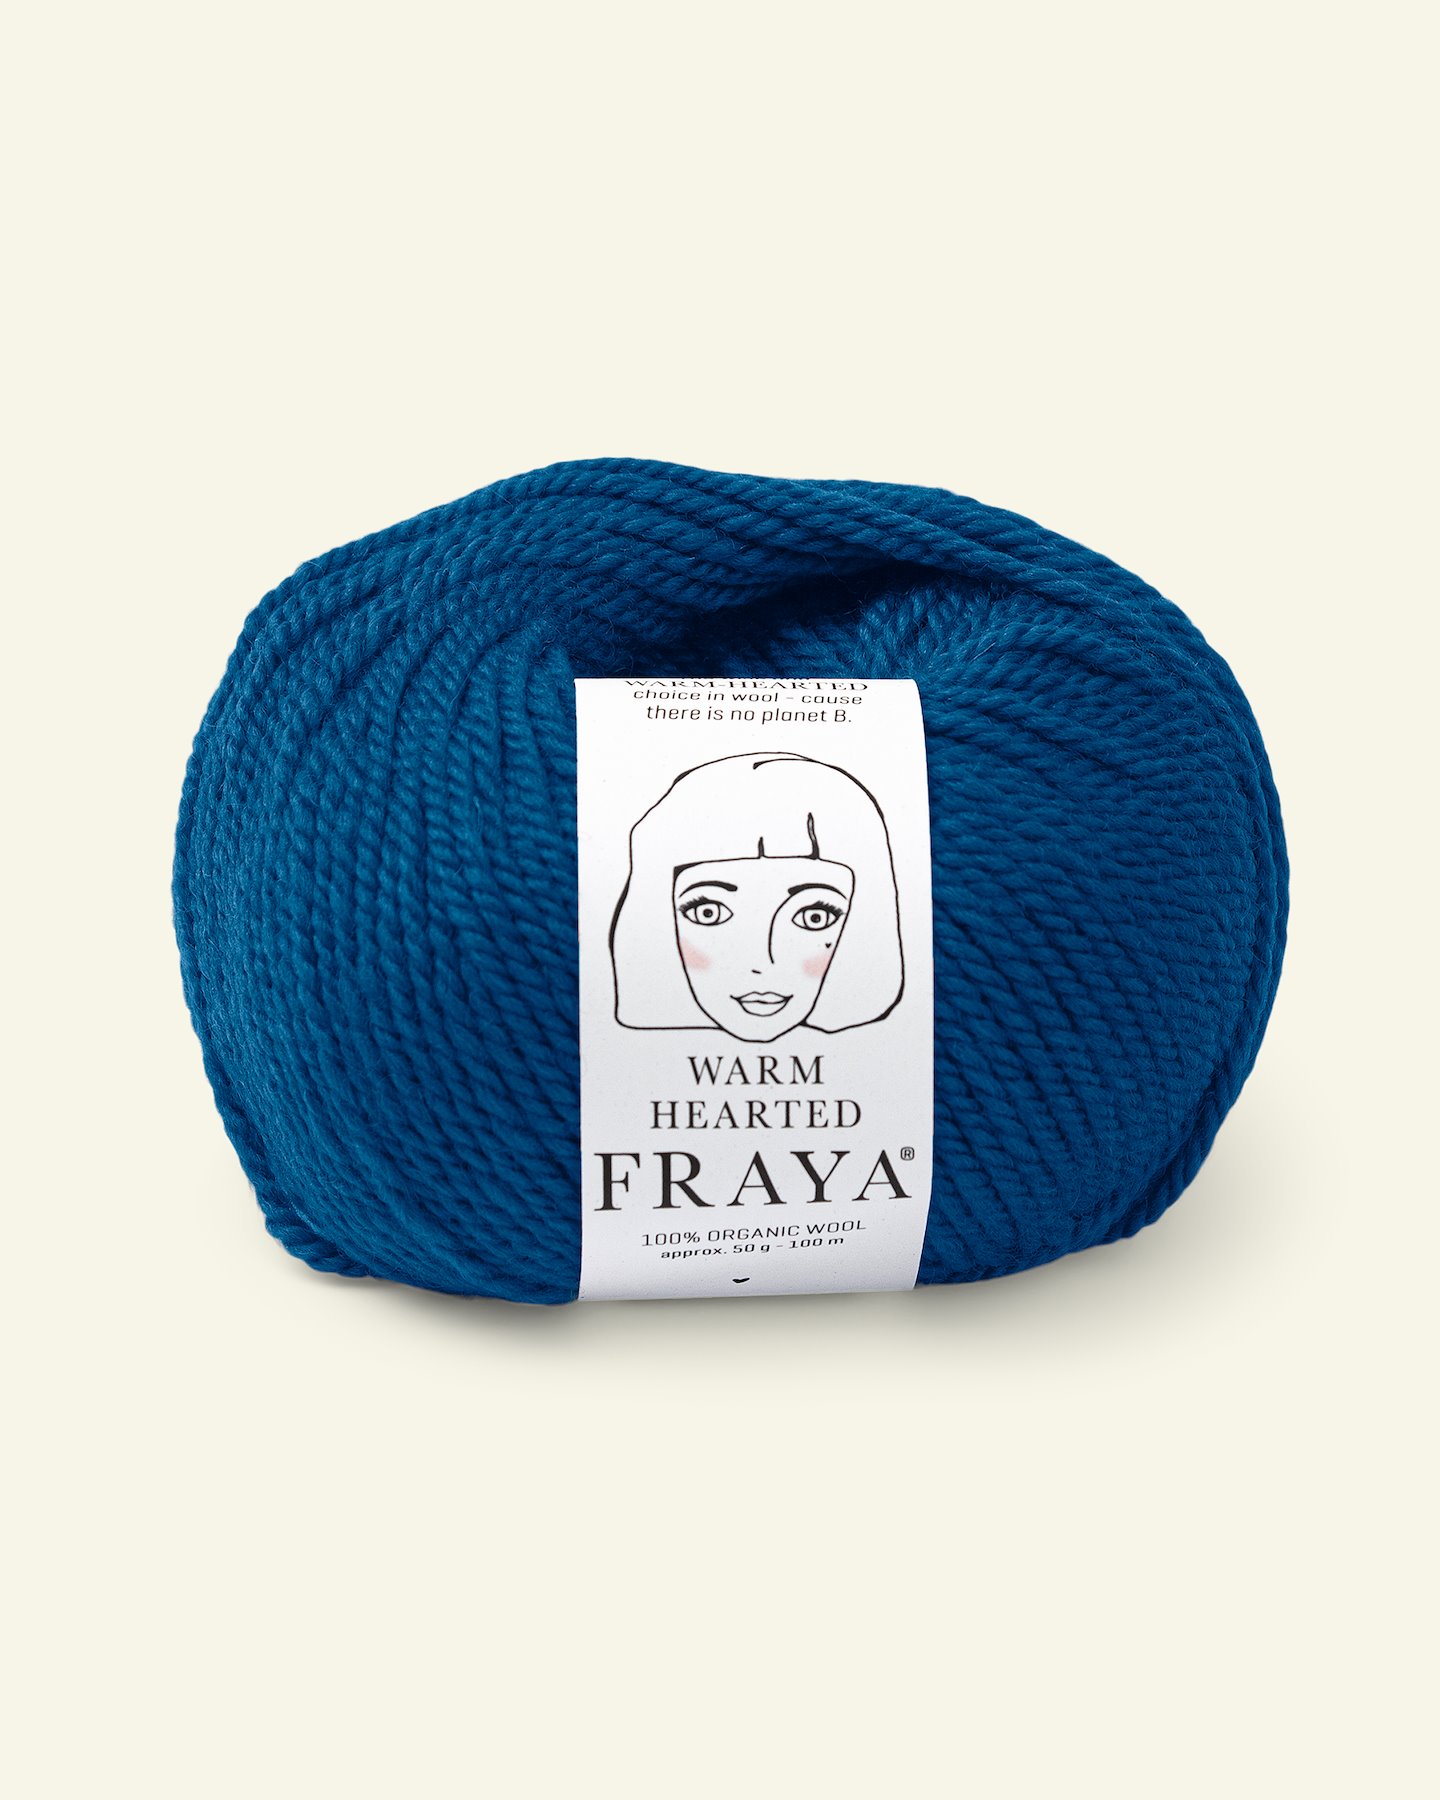 FRAYA, 100% organic wool "Warm hearted", cobalt 90000926_pack